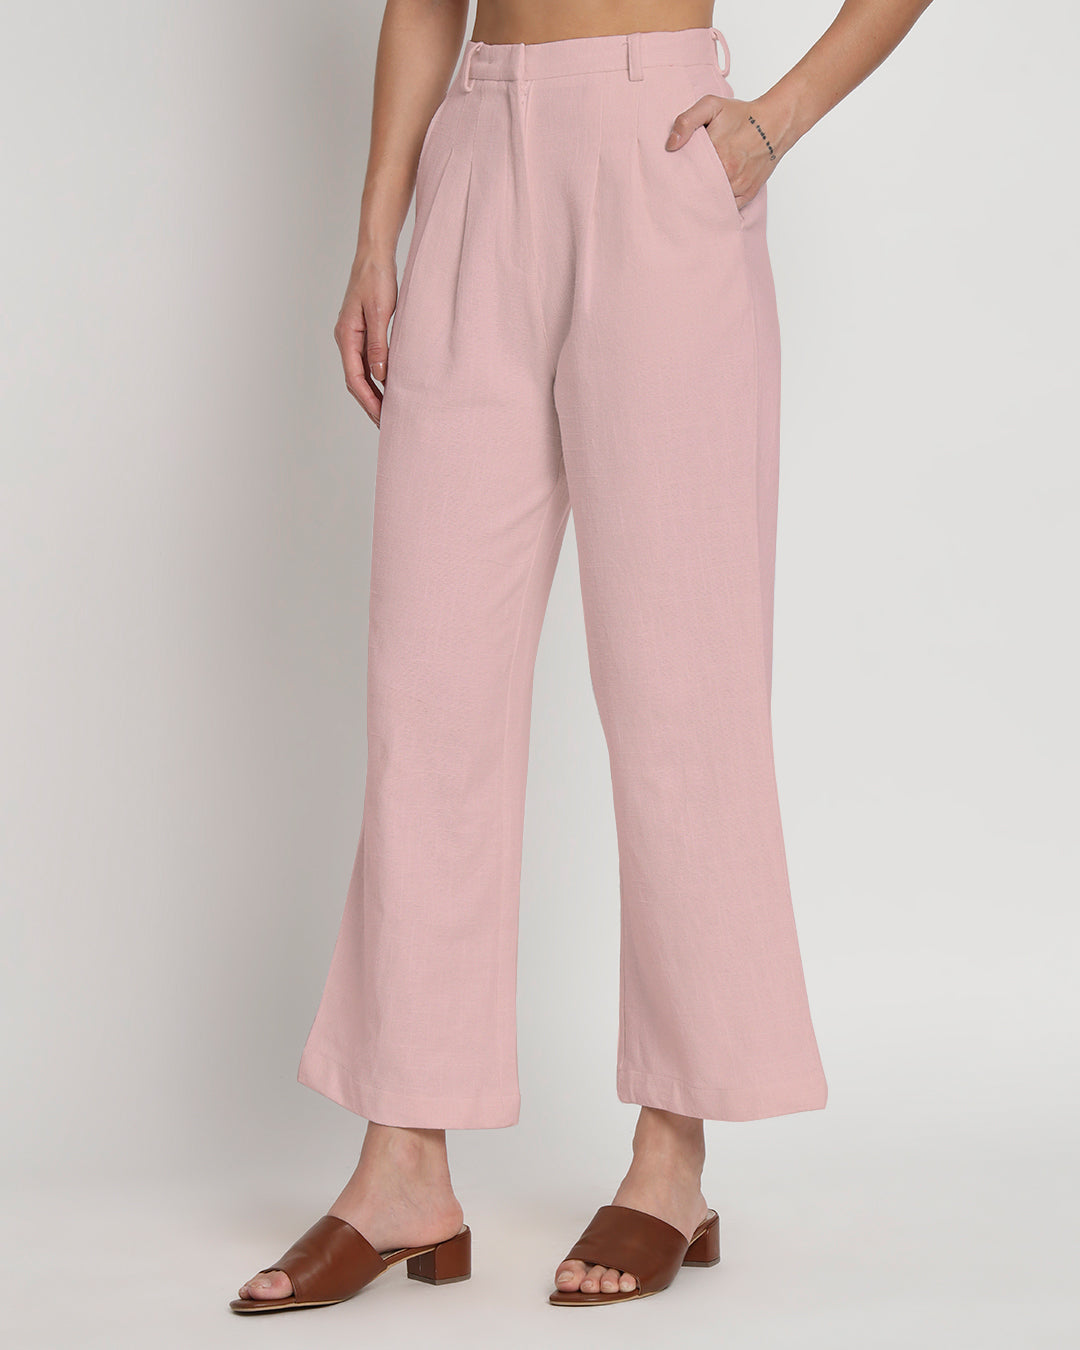 Easeful Tailored Elegance Fondant Pink Pants